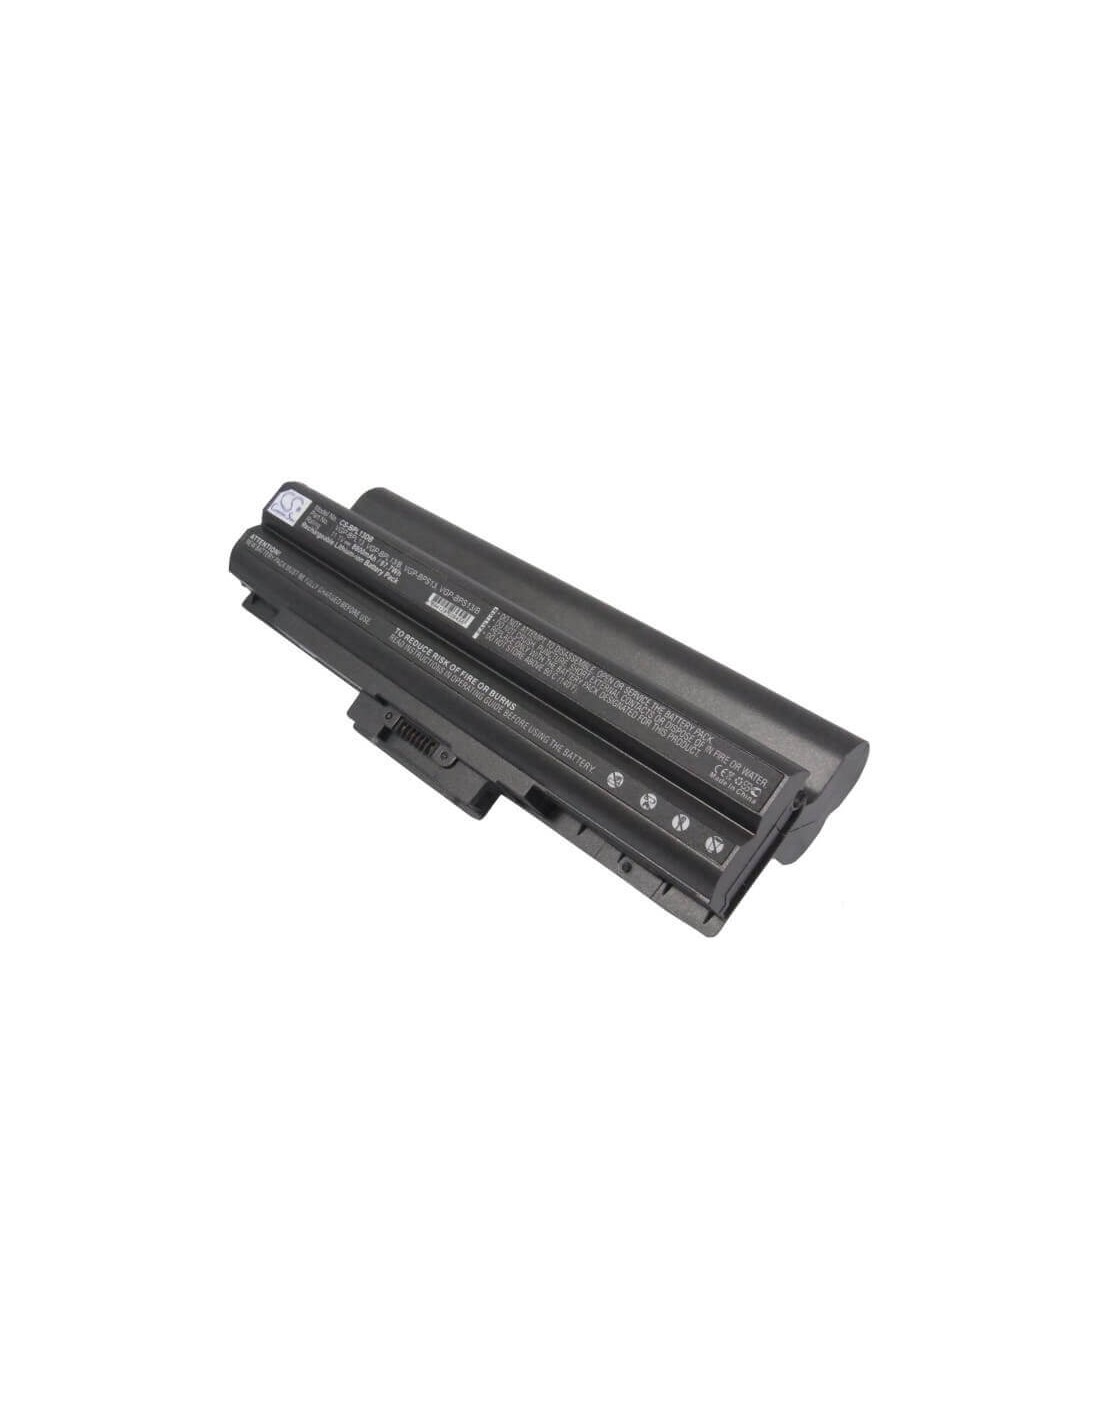 Black Battery for Sony Vaio Vgn-aw230j/h, Vaio Vgn-aw235j/b, Vaio Vgn-aw290jfq 11.1V, 8800mAh - 97.68Wh